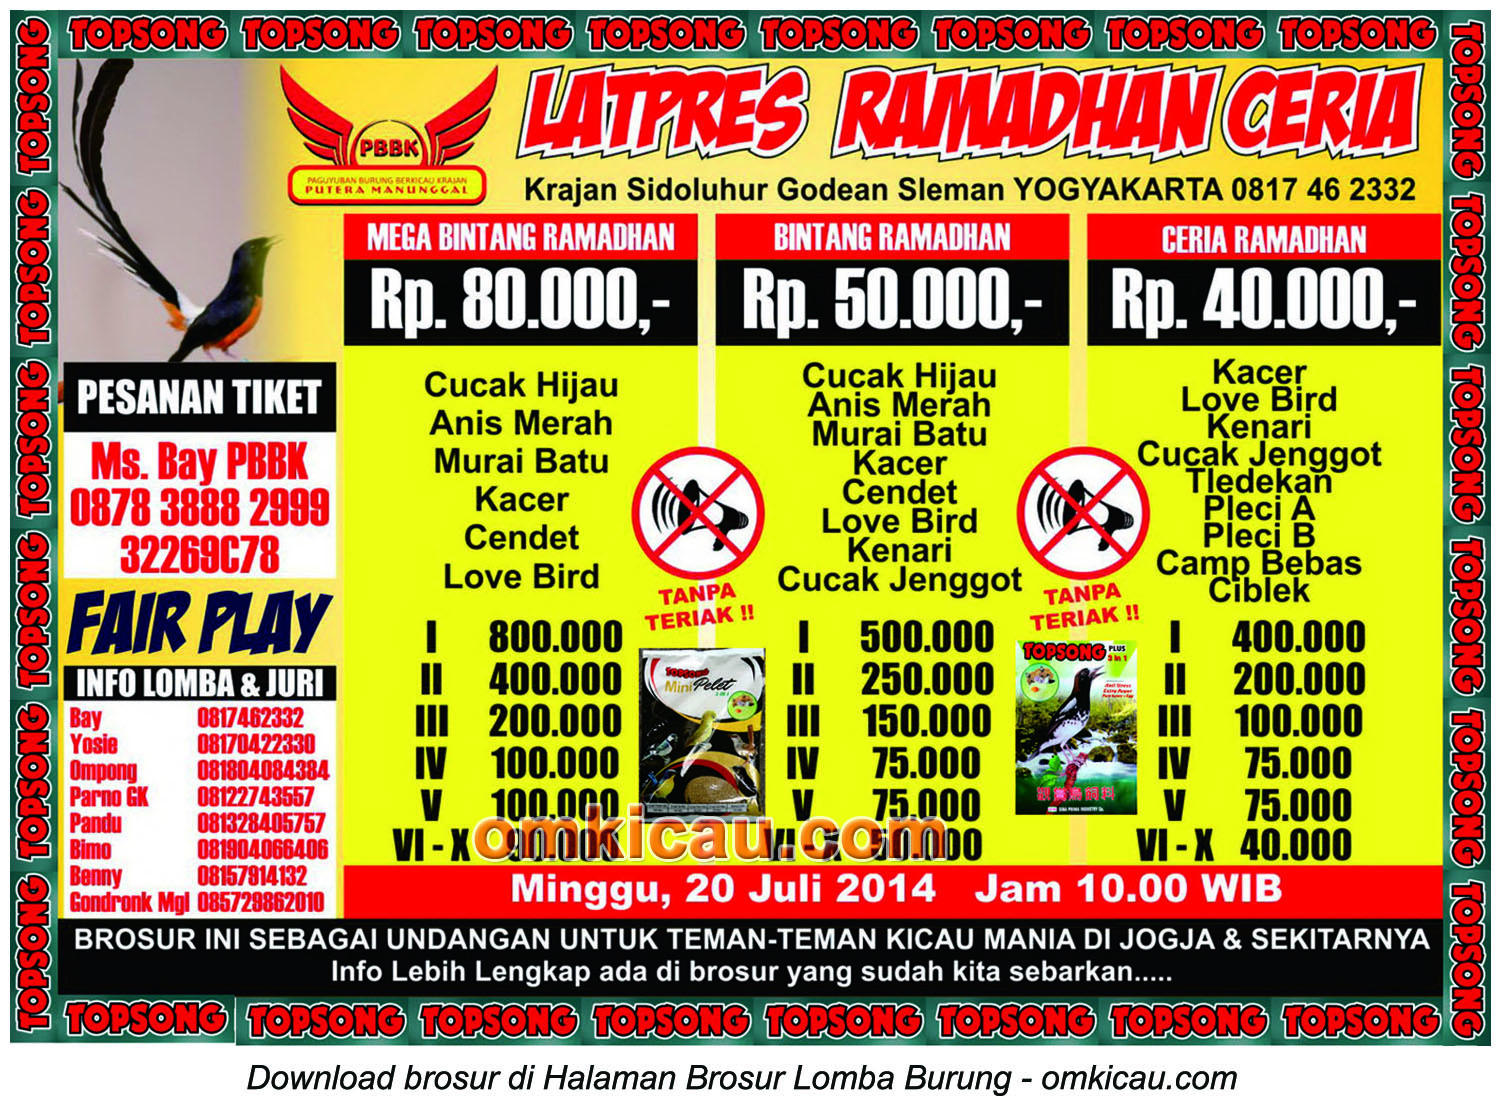 Brosur Latpres Ramadhan Ceria PBBK Krajan, Jogja, 20 Juli 2014